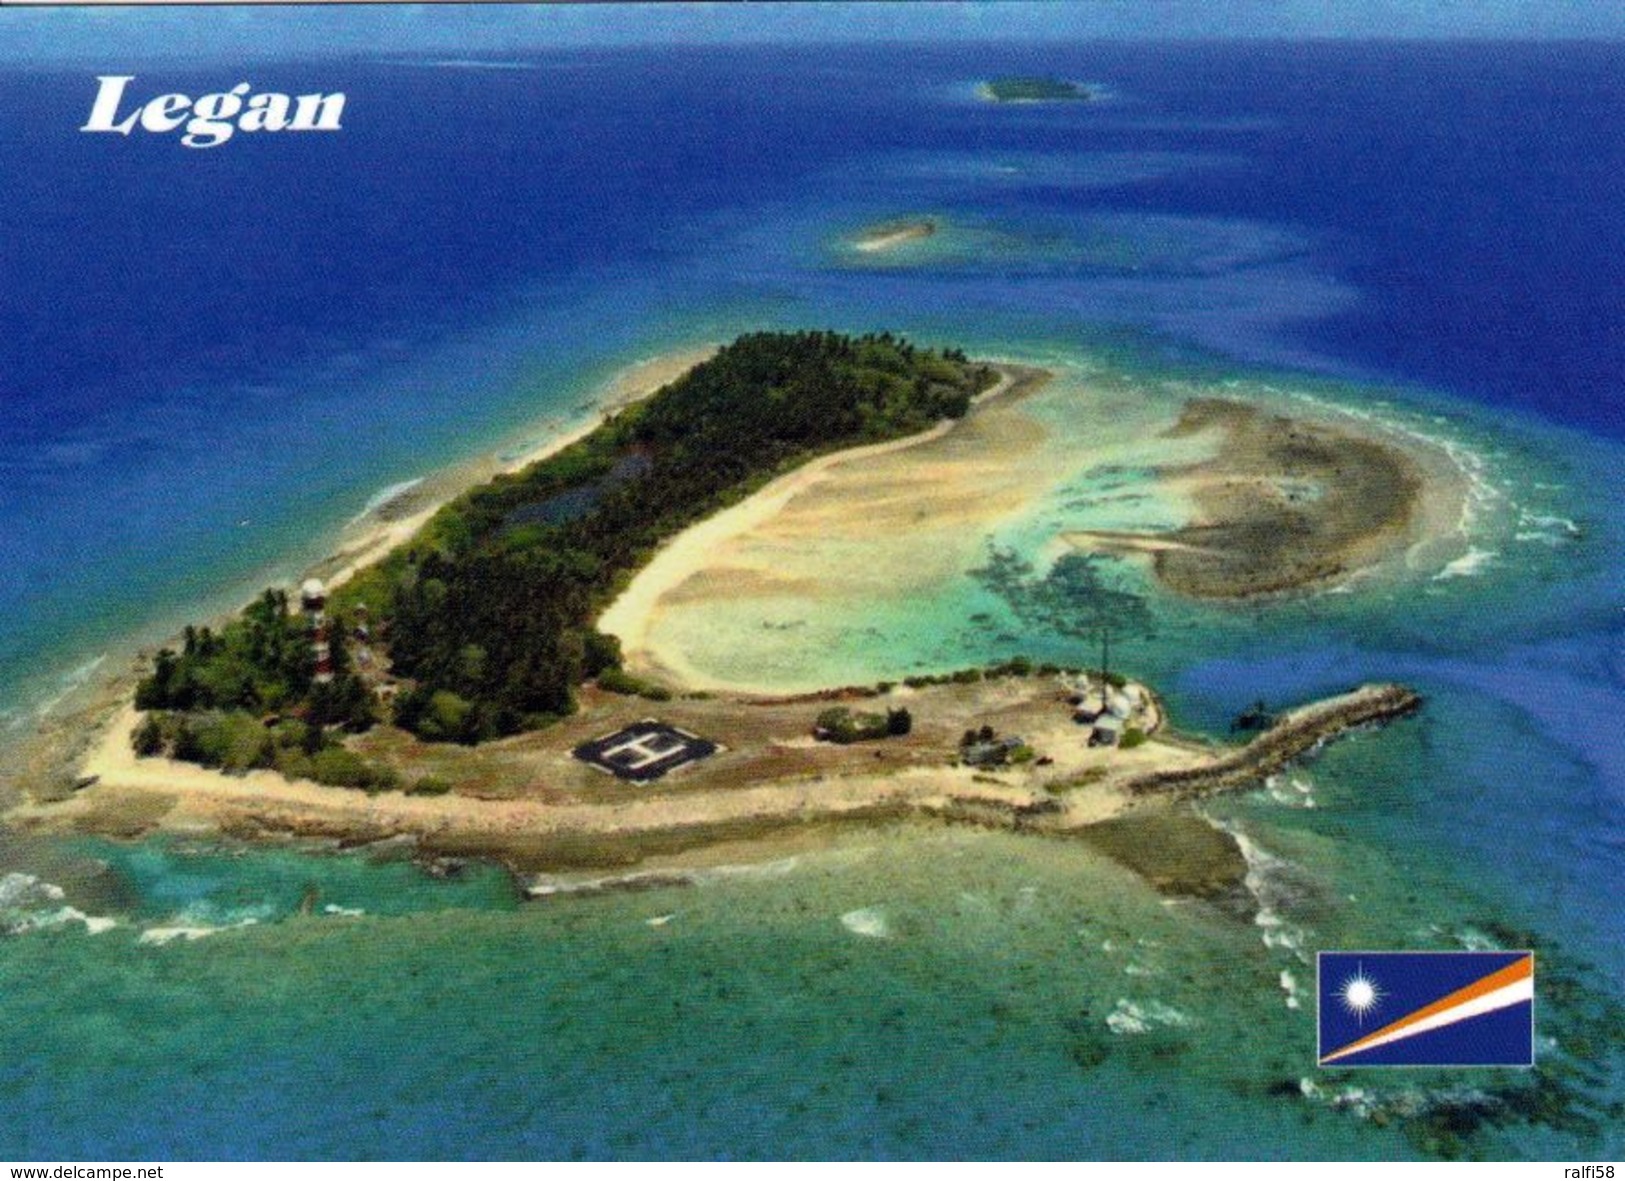 1 AK Marshall Islands * Blick Auf Die Insel Legan - Luftbildaufnahme * - Marshall Islands